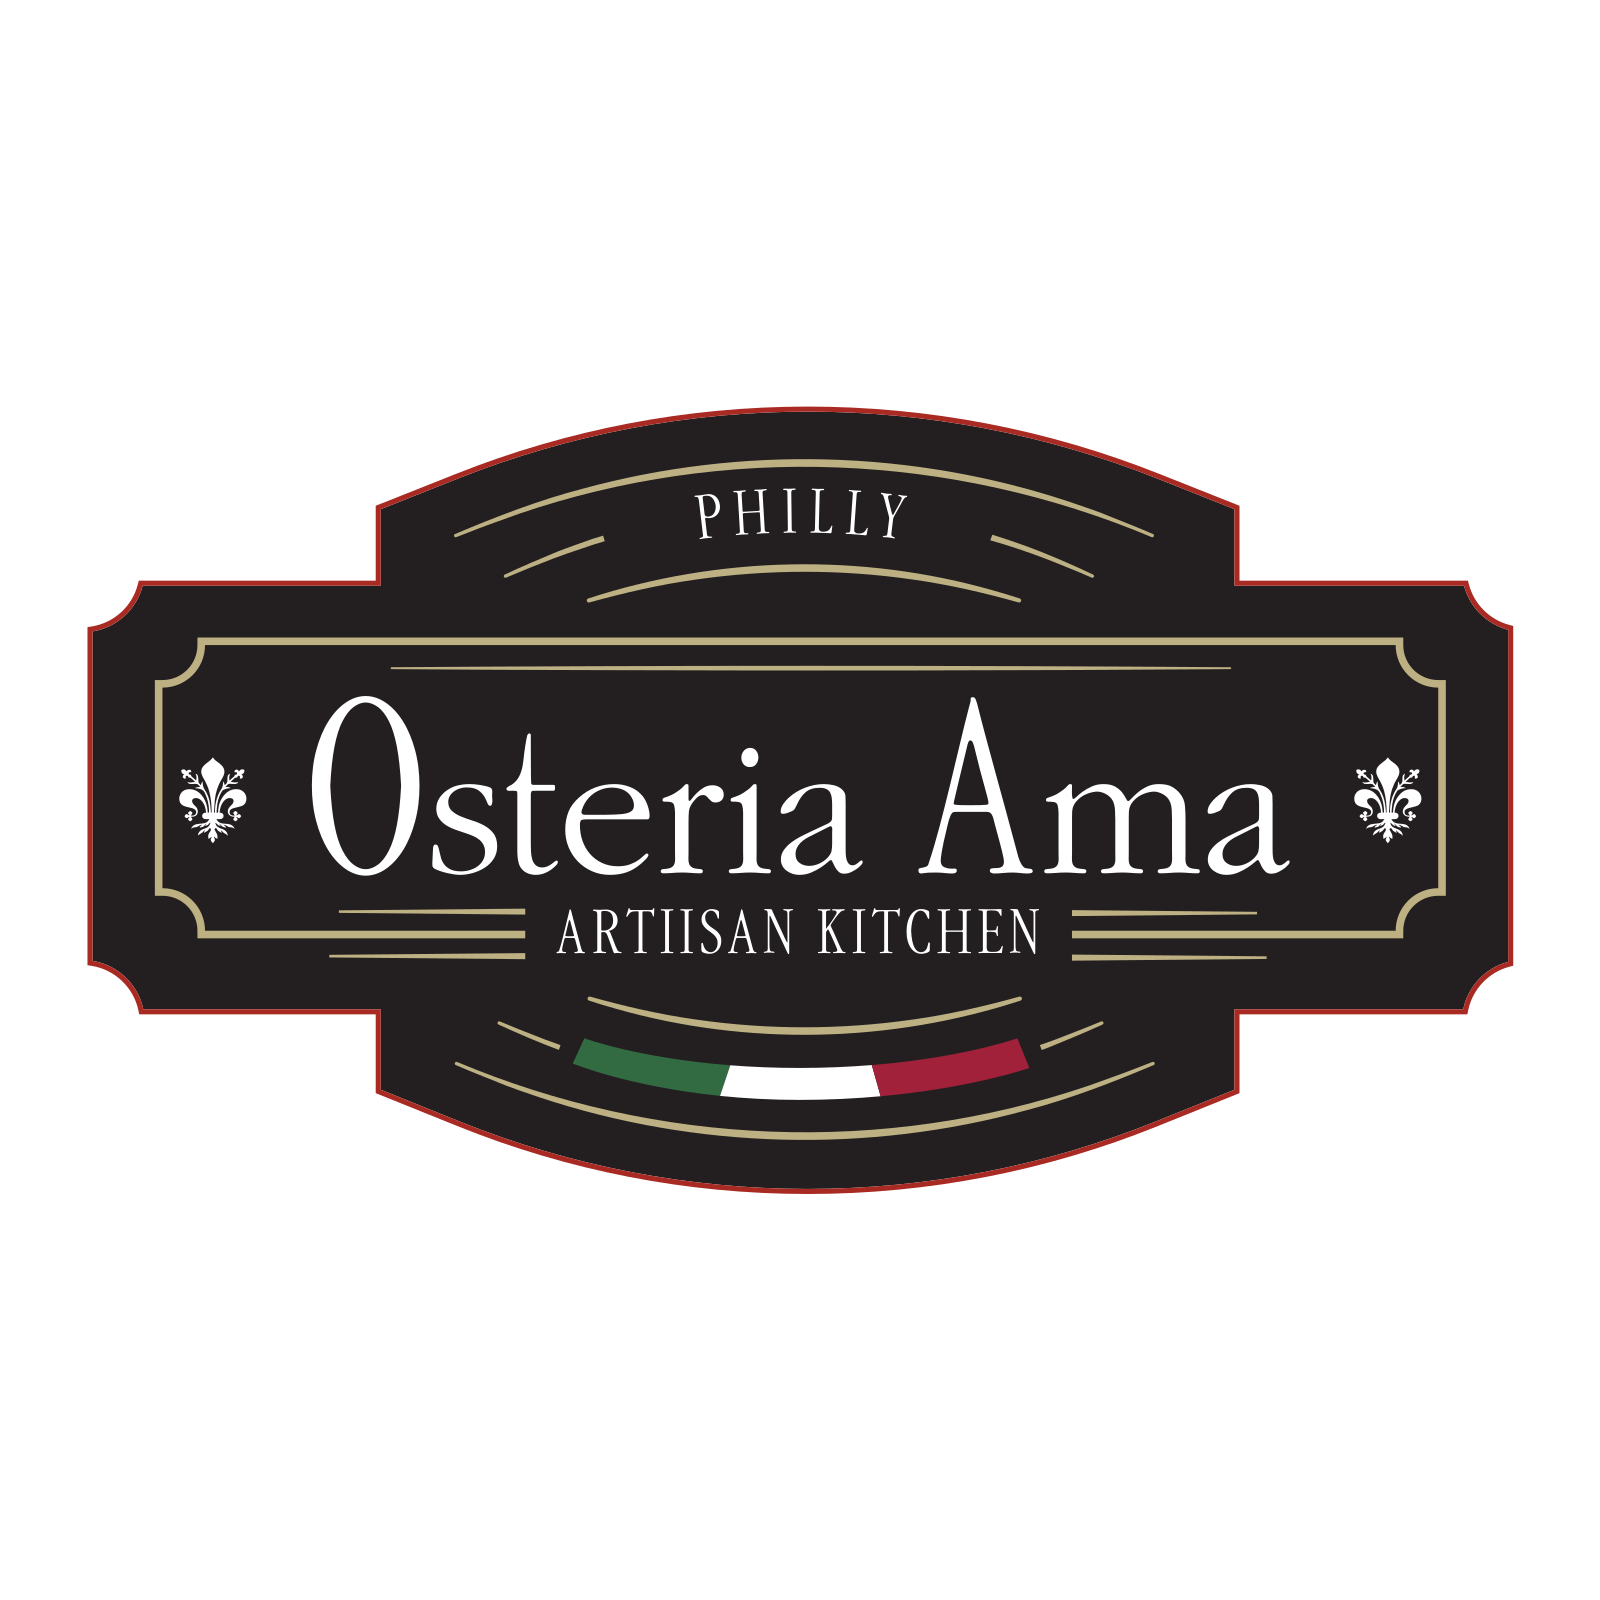 Osteria Ama - Philly logo